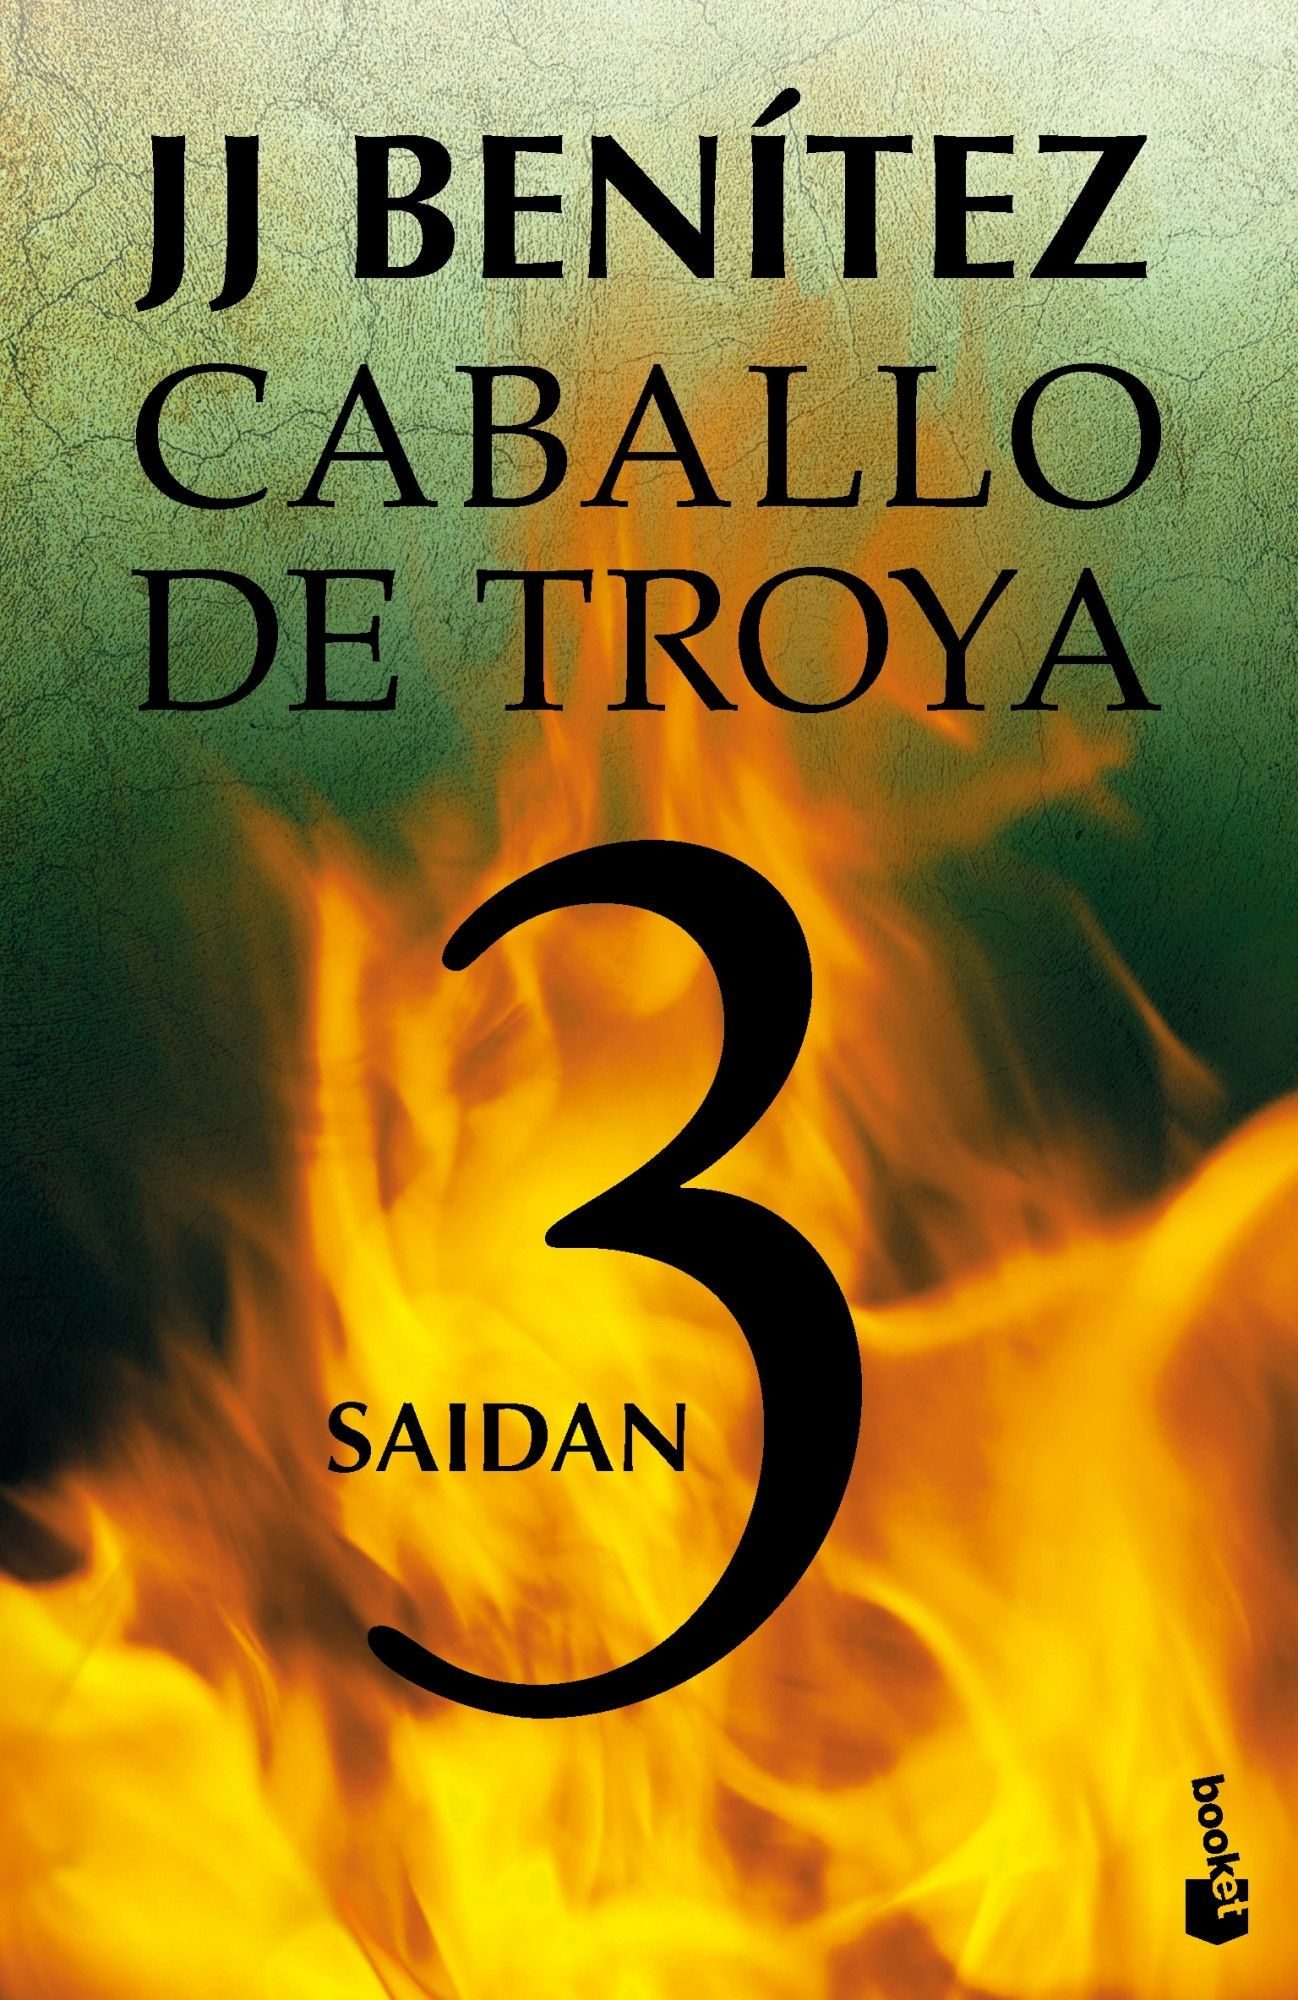 Caballo de Troya 3: Saidan - J. J. Benitez